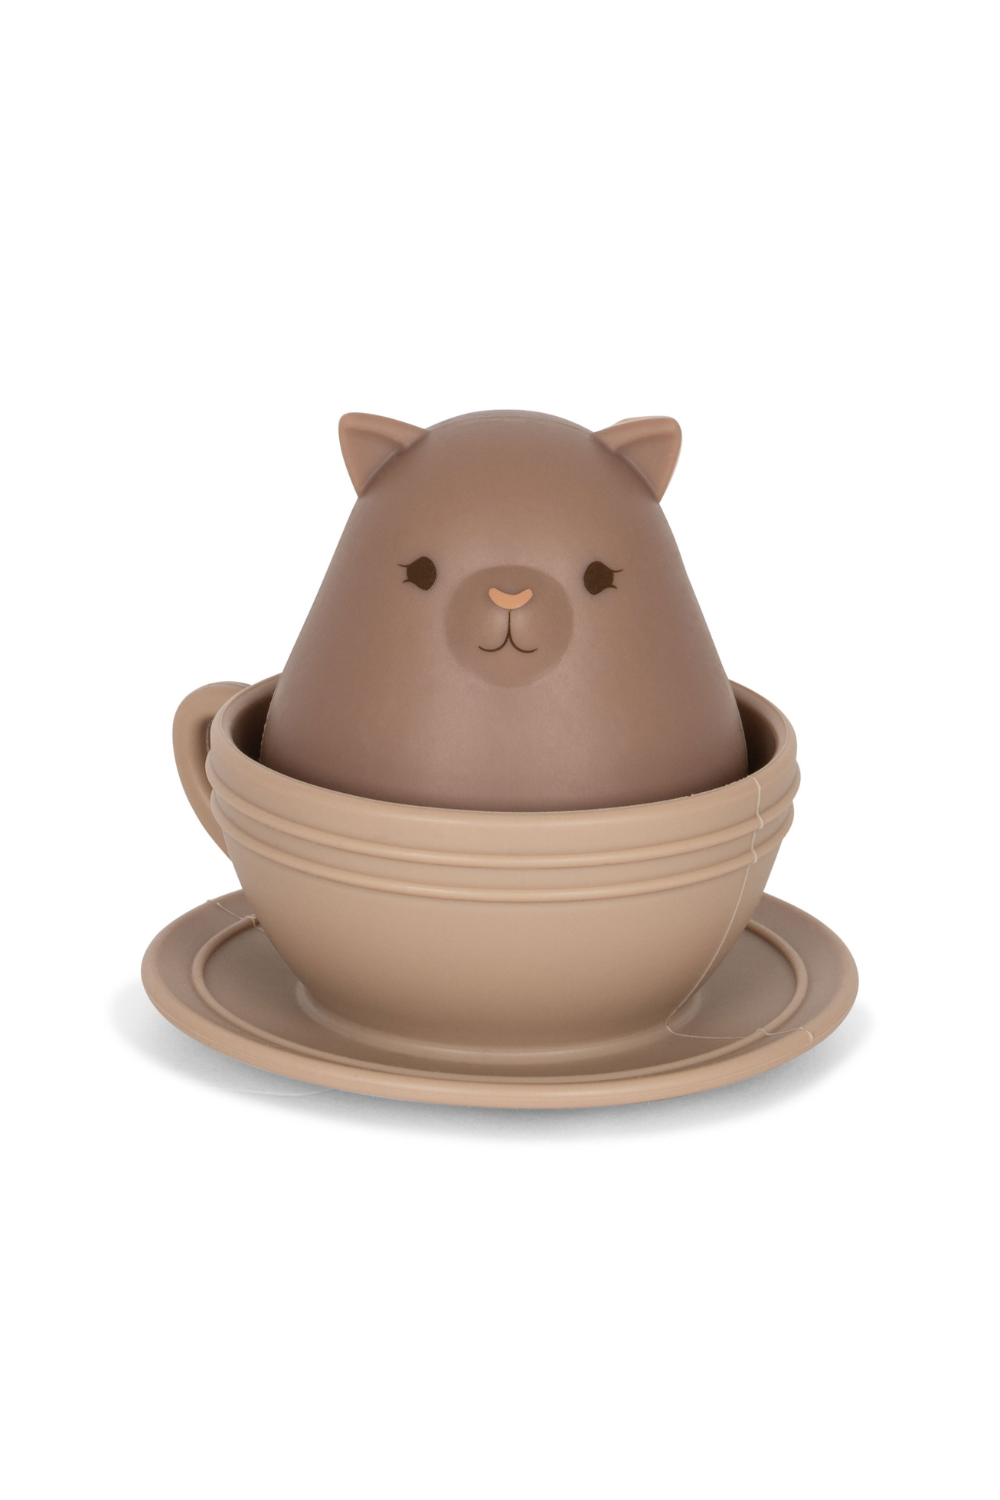 Silicone Bath Toy Set - Teacups: Whimsical Bathtime Fun